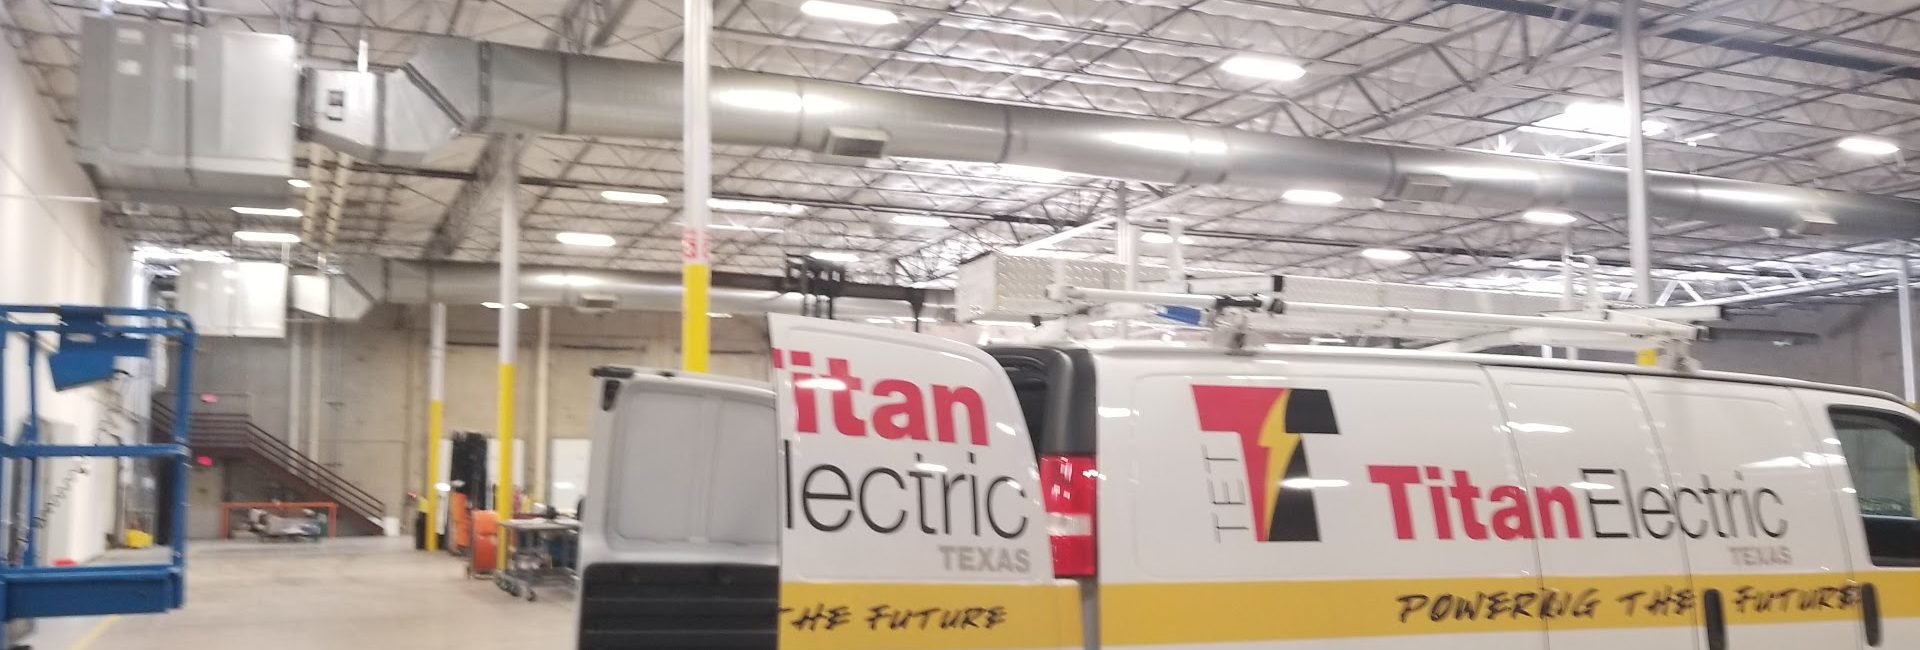 Titan Electric Texas 5